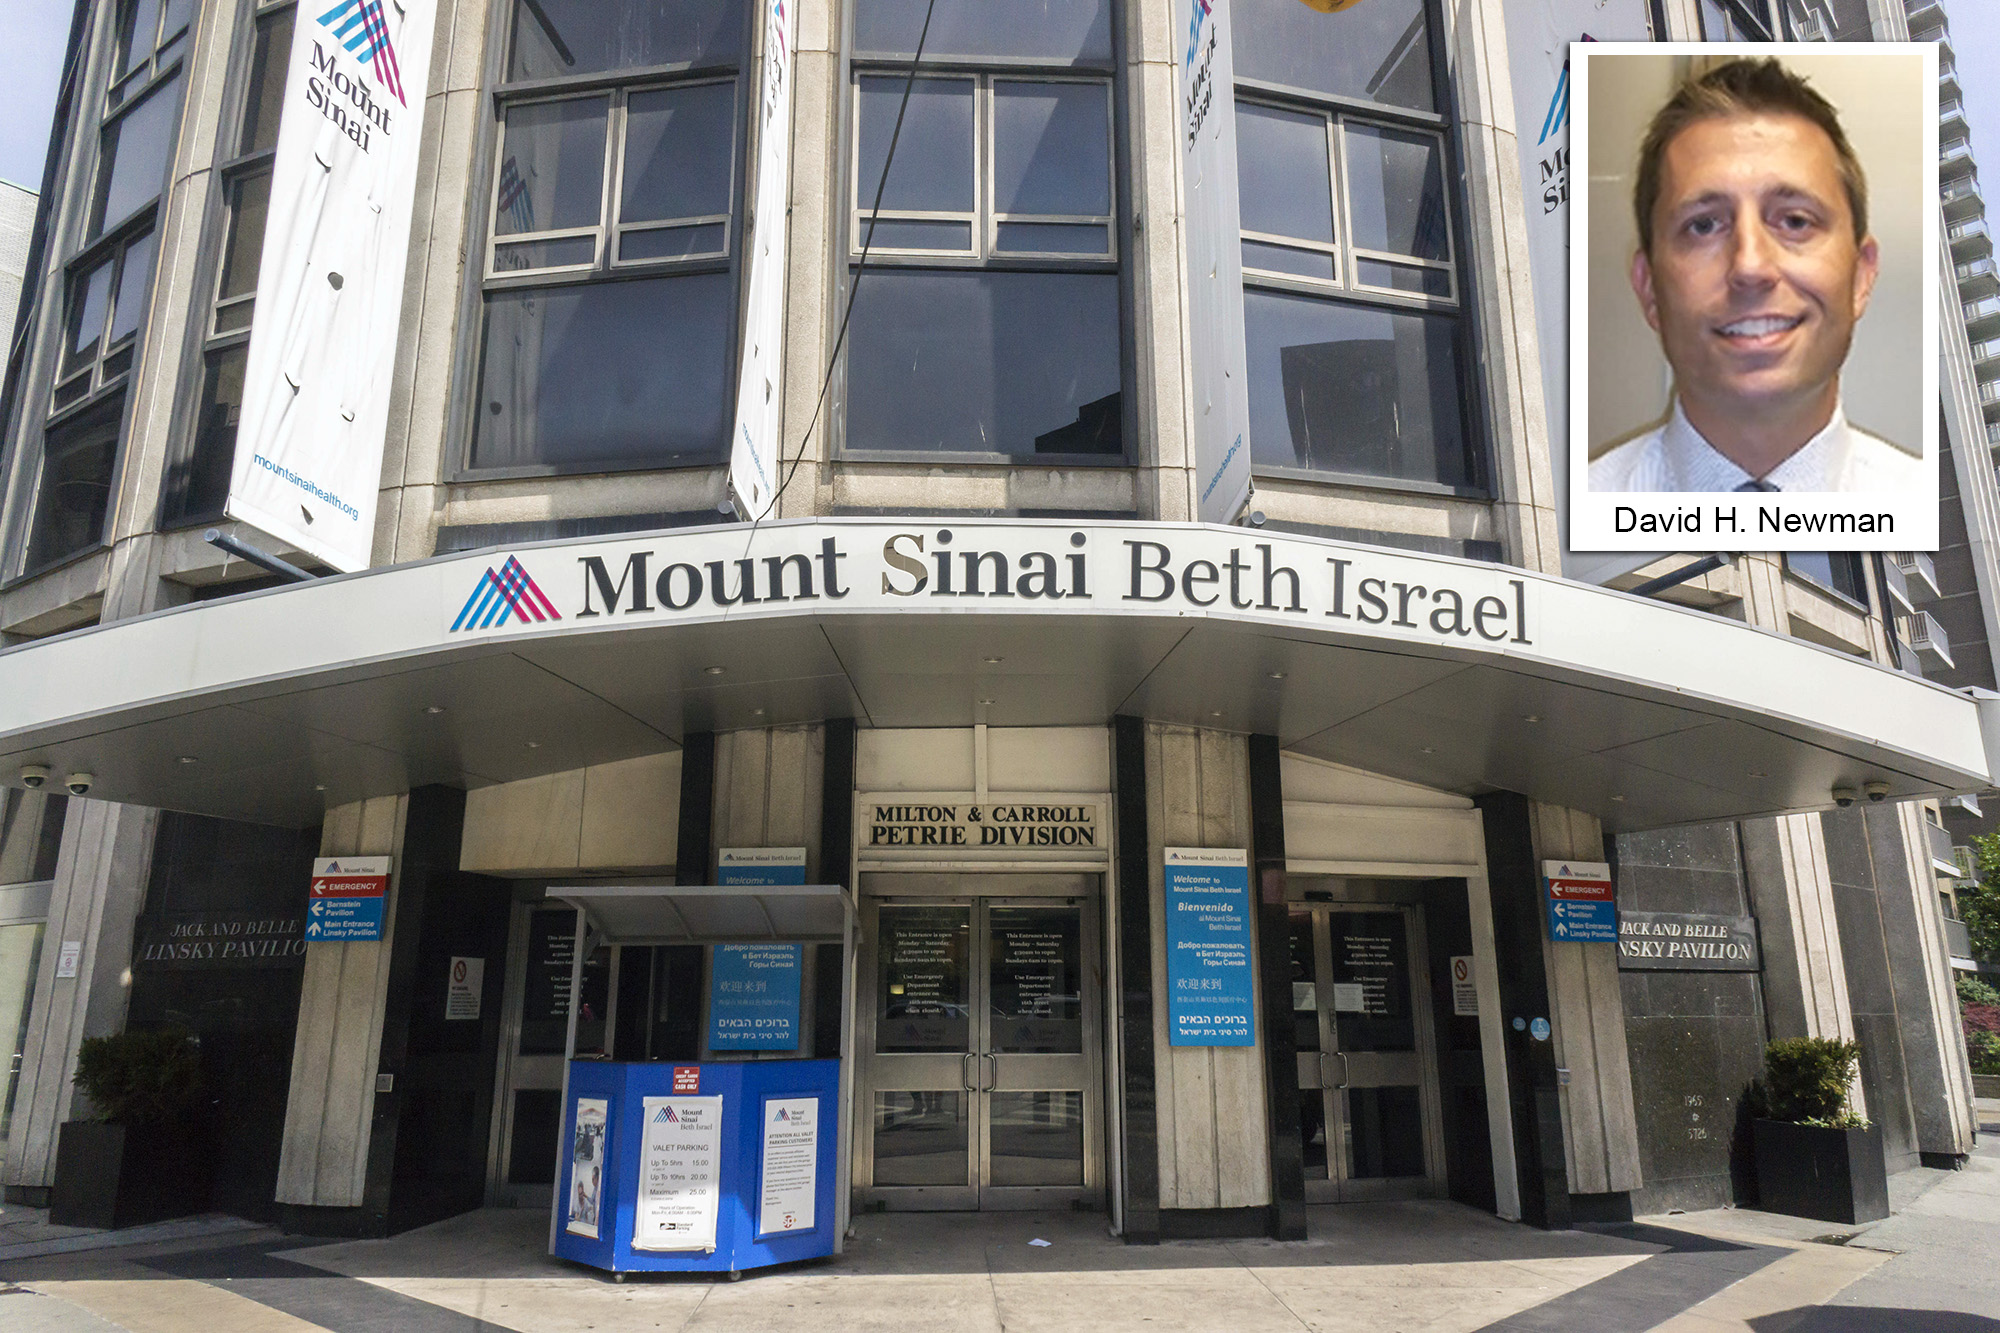 Mount Sinai Beth Israel, David H. Newman